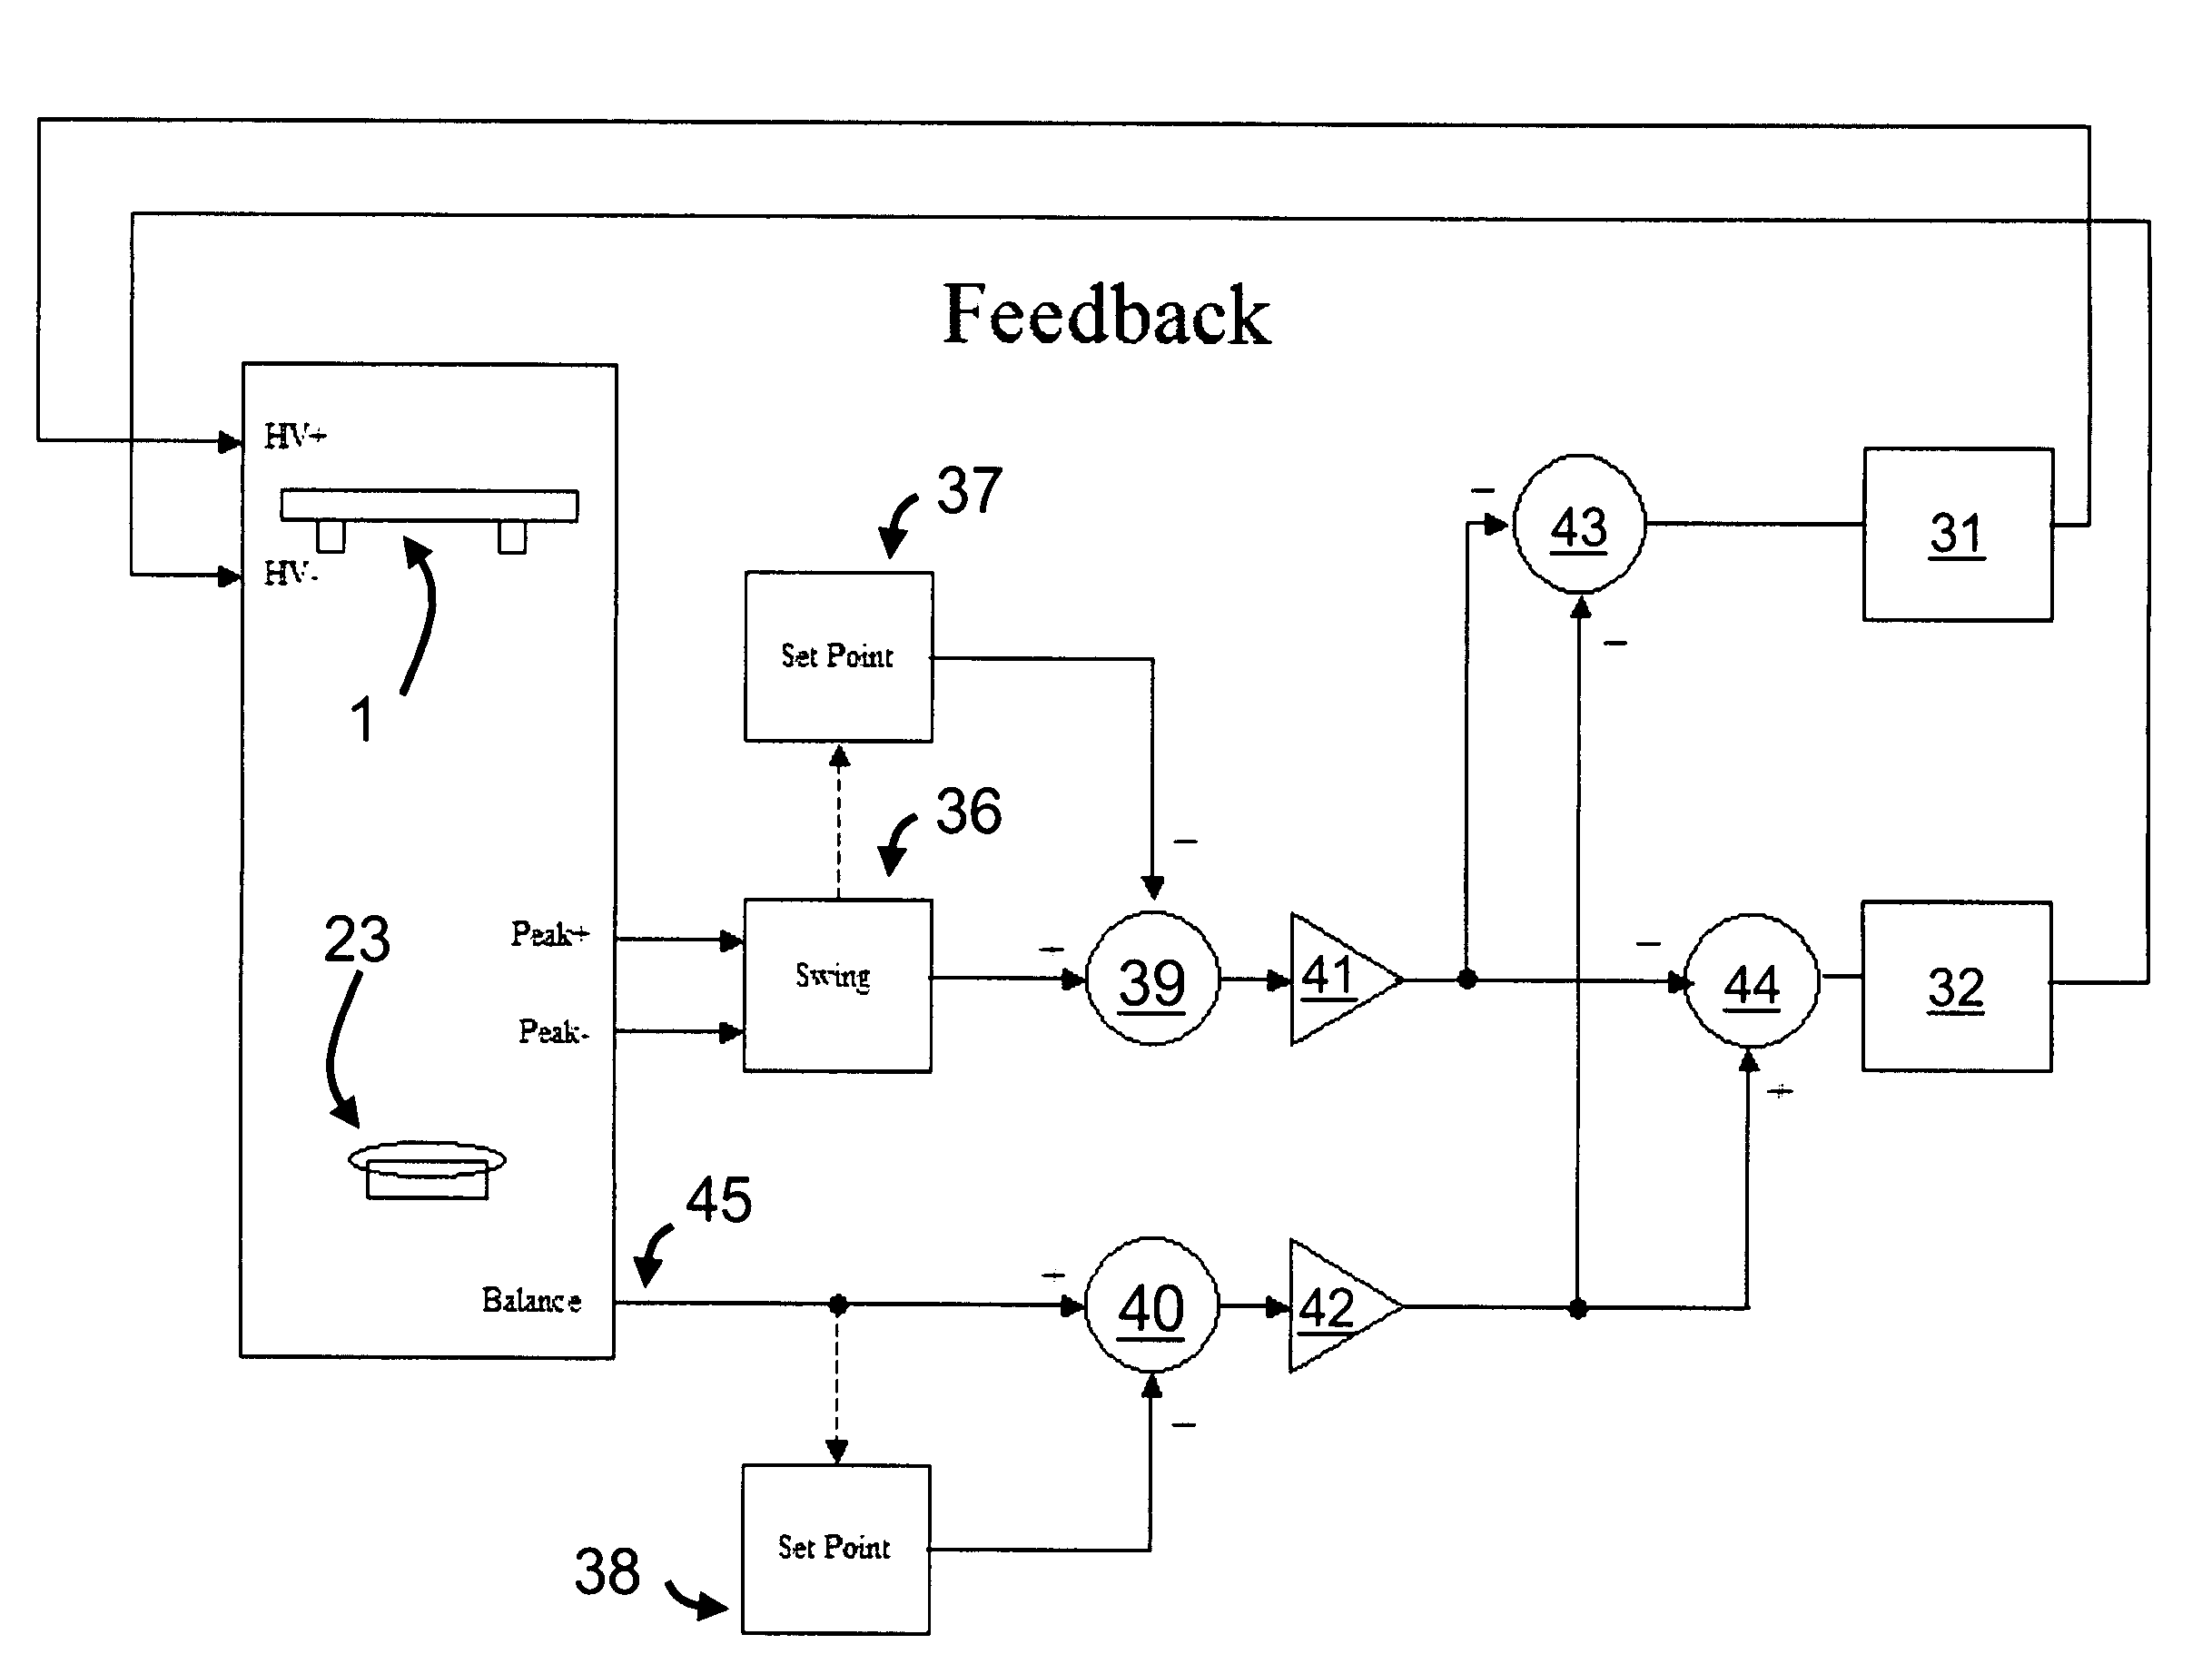 Multiple sensor feedback for controlling multiple ionizers